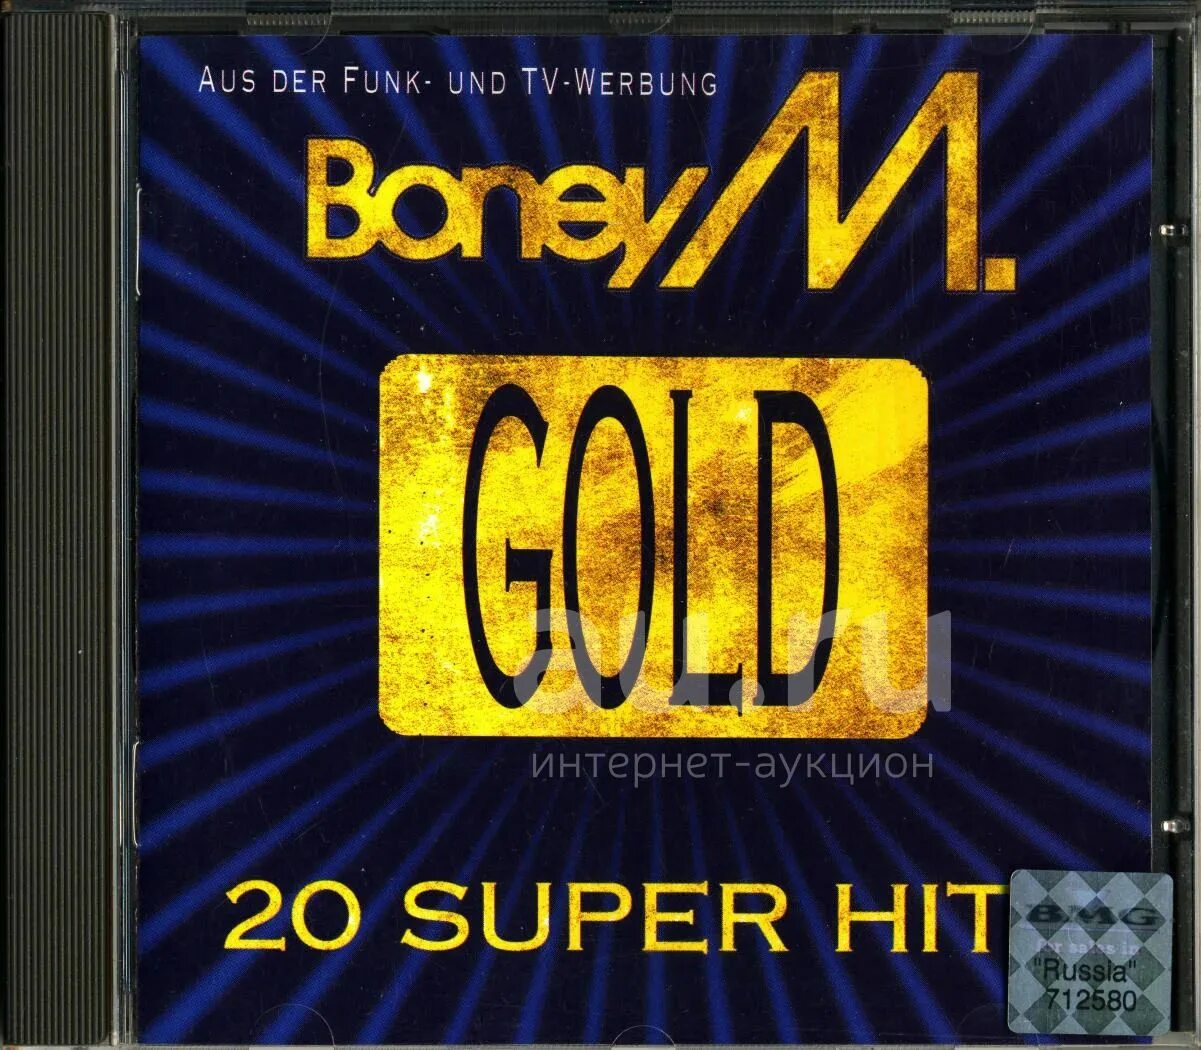 Boney m. – Gold (20 super Hits). Volume 1 пластинка. Boney m Gold 20 super Hits. Boney m Gold 20 super Hits 1992 пластинка. Boney m 20 super Hits 2.